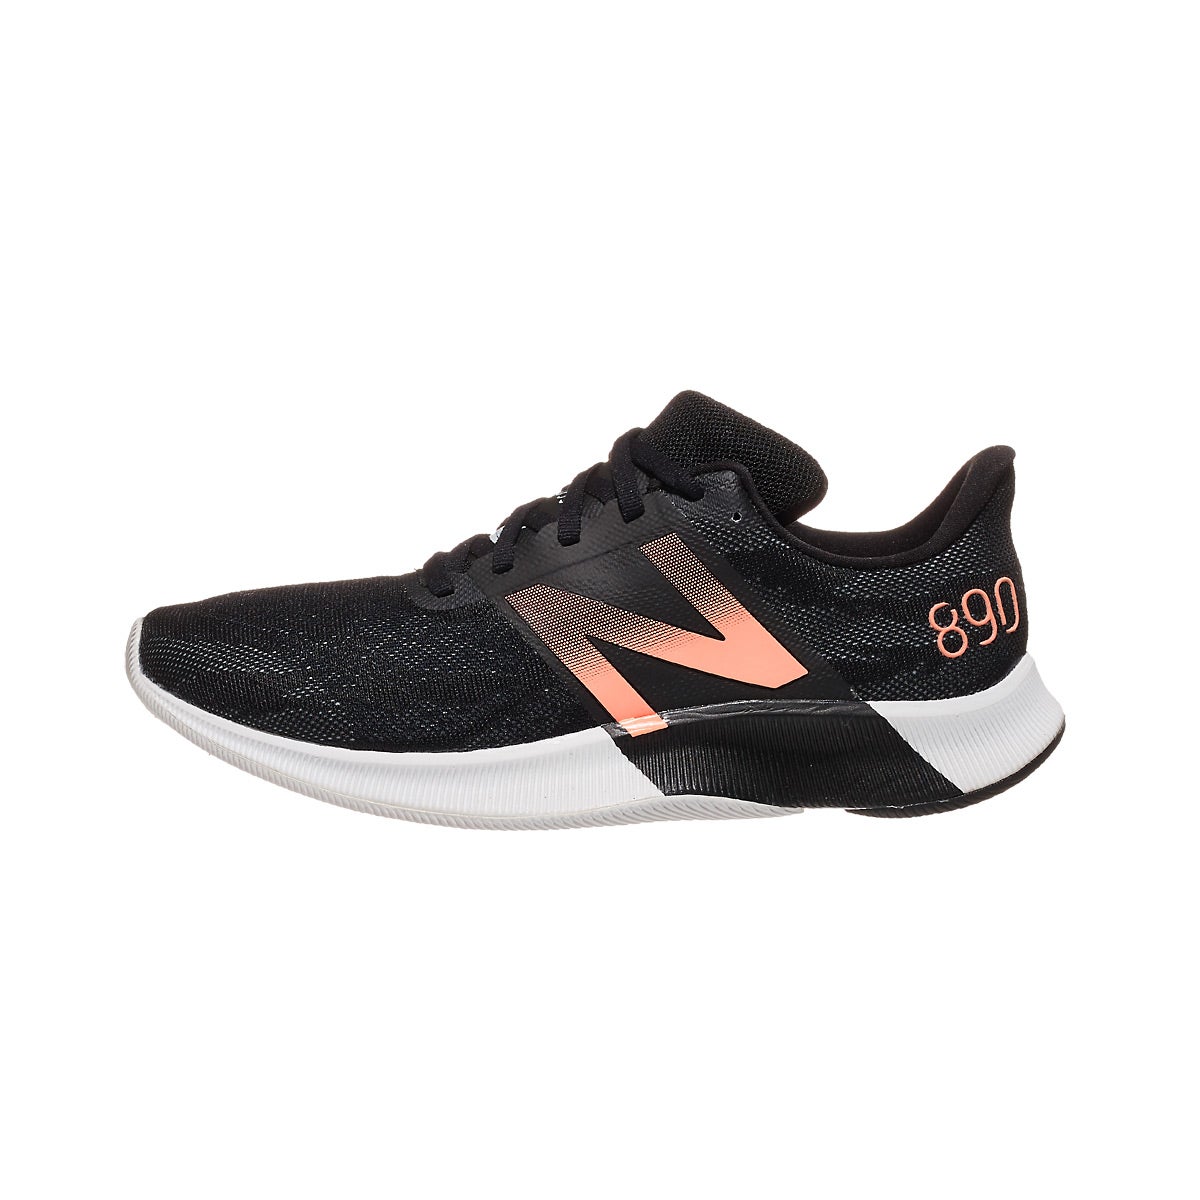 New Balance 890 v8 Women's Shoes Thunder/Multicolor 360° View | Running ...